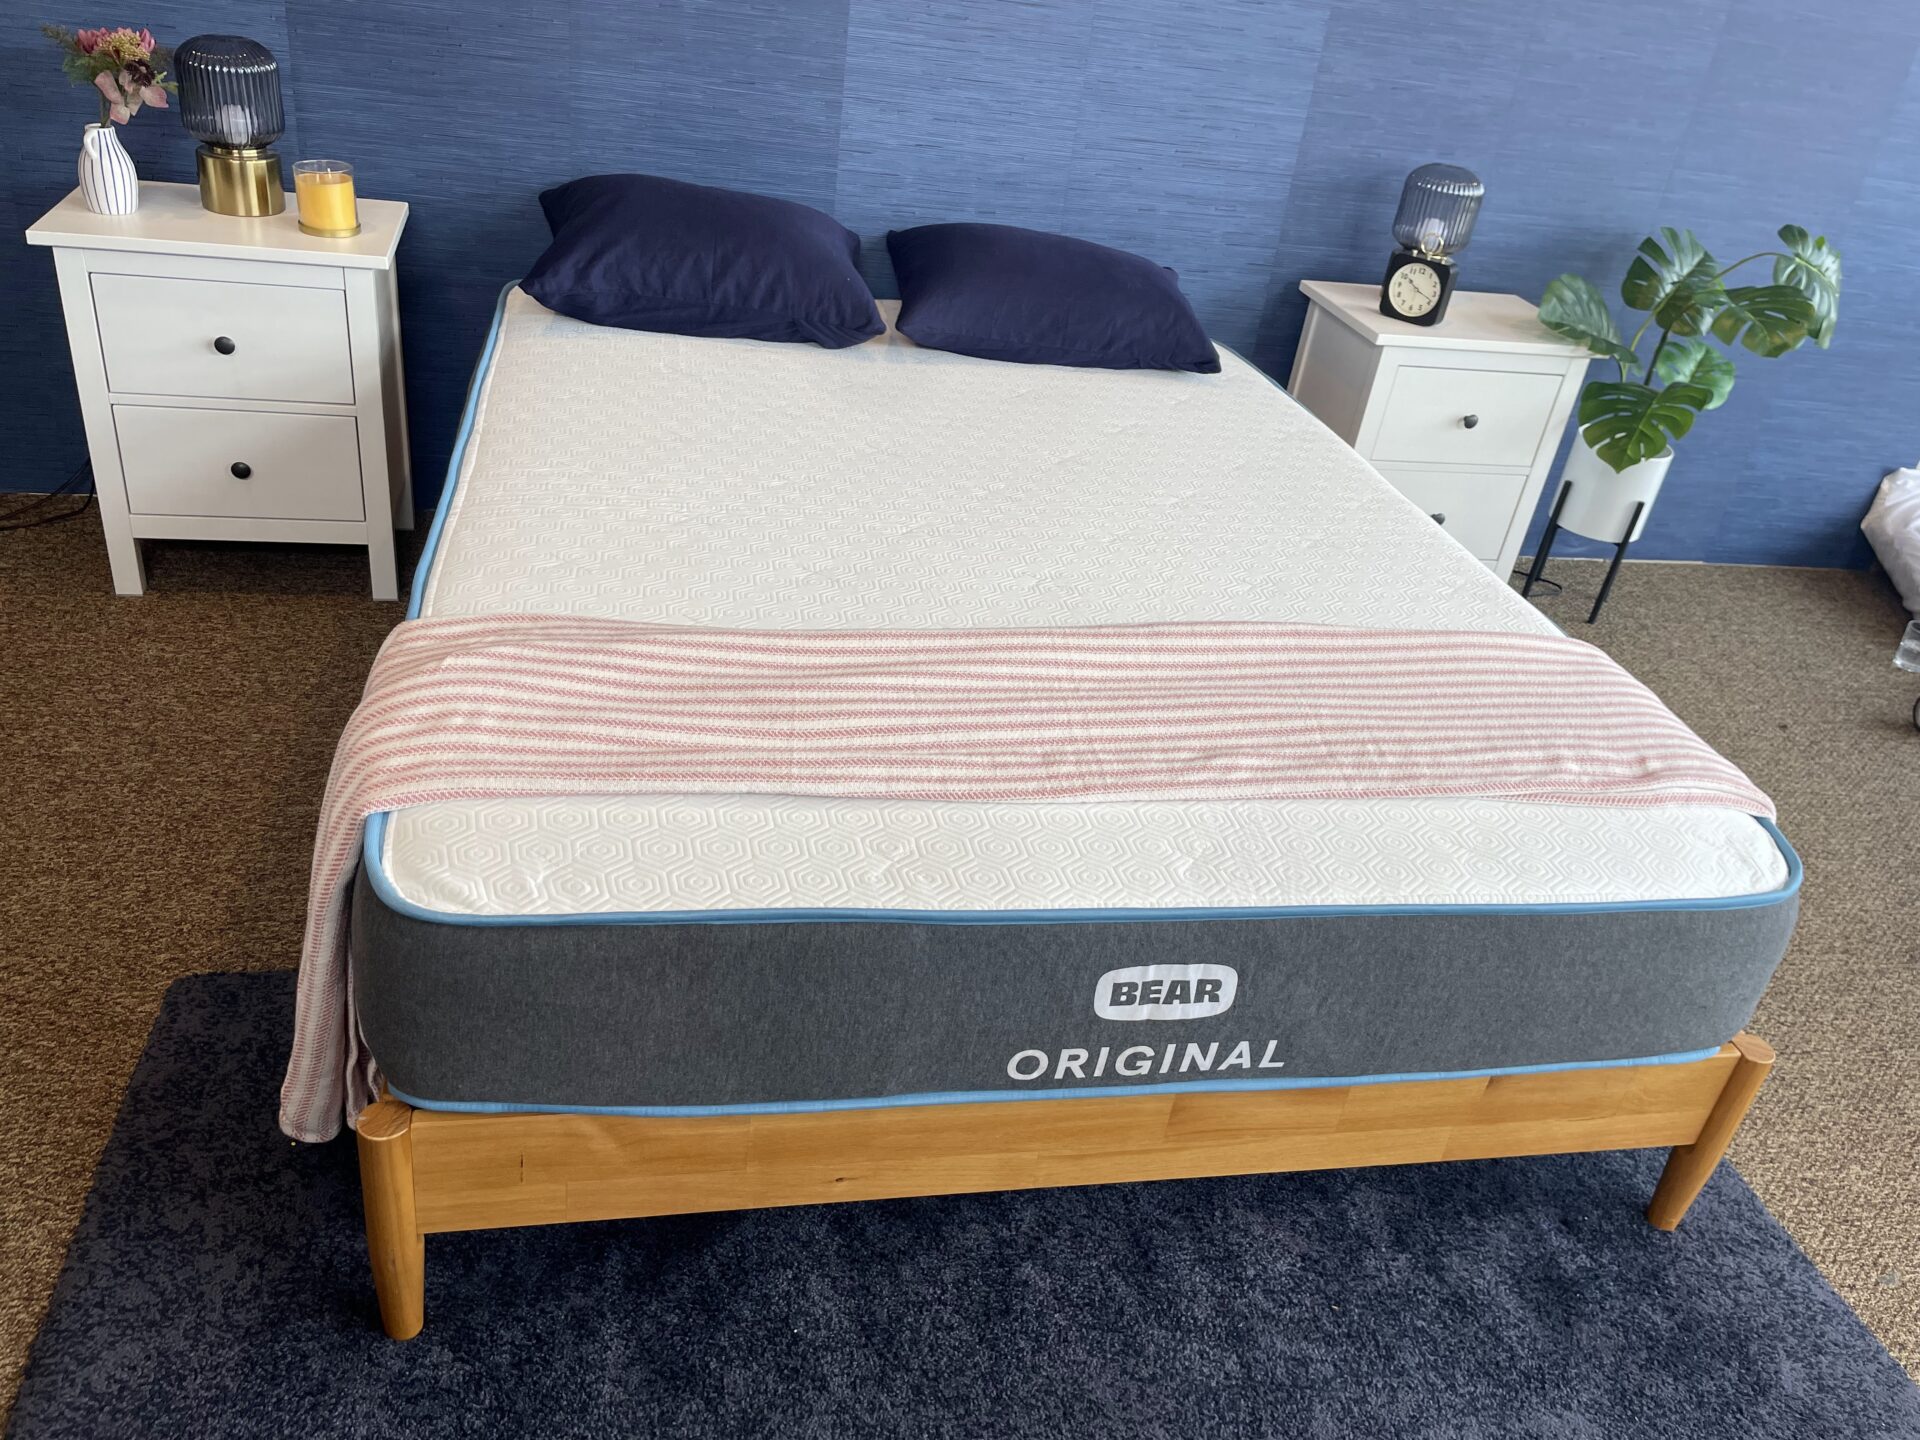 Bear Original mattress with navy pillows and a striped blanket